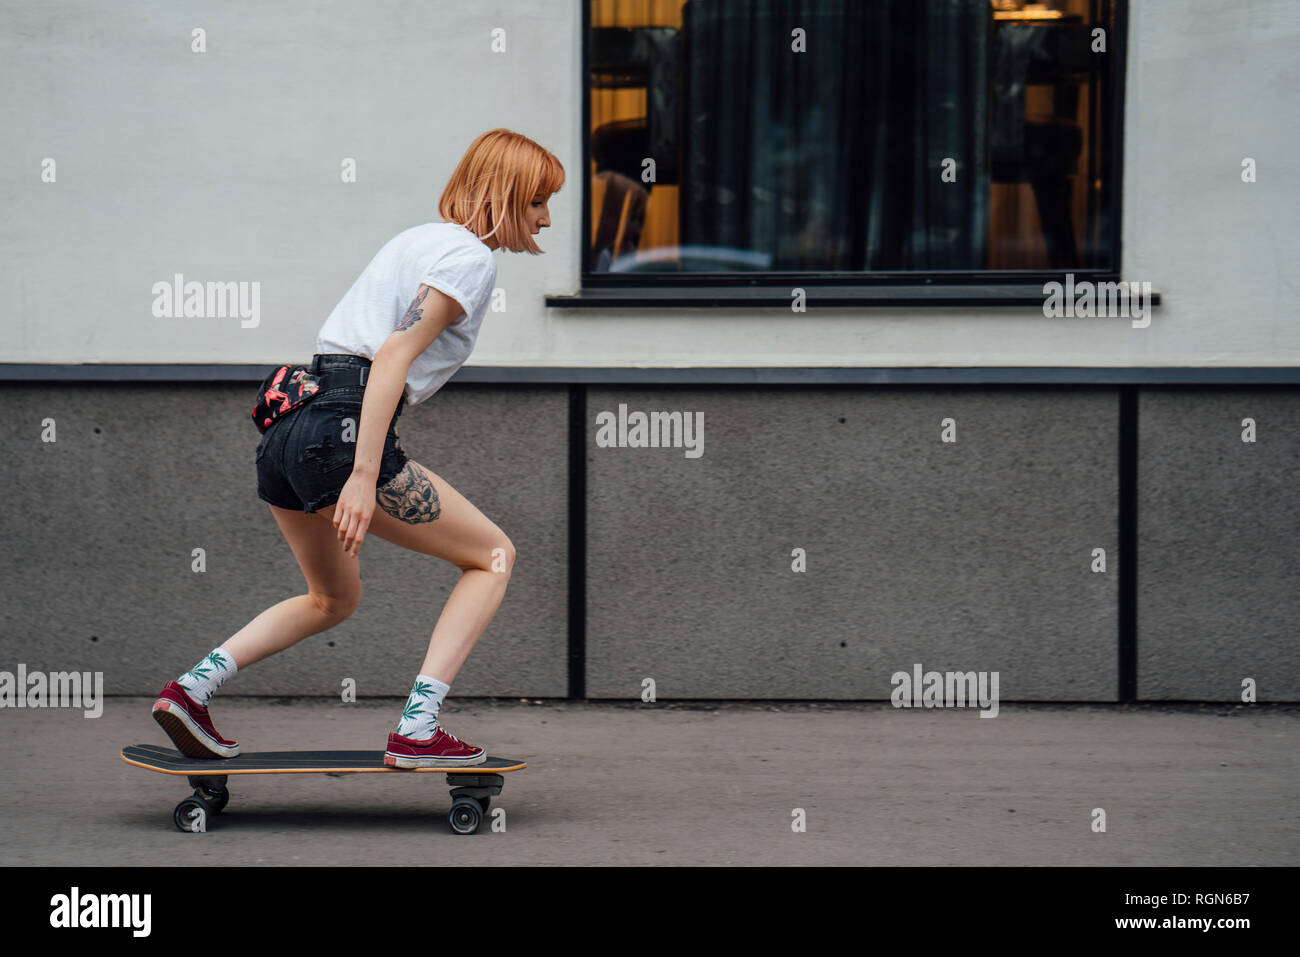 Giovane donna cavallo carver skateboard sul marciapiede Foto Stock